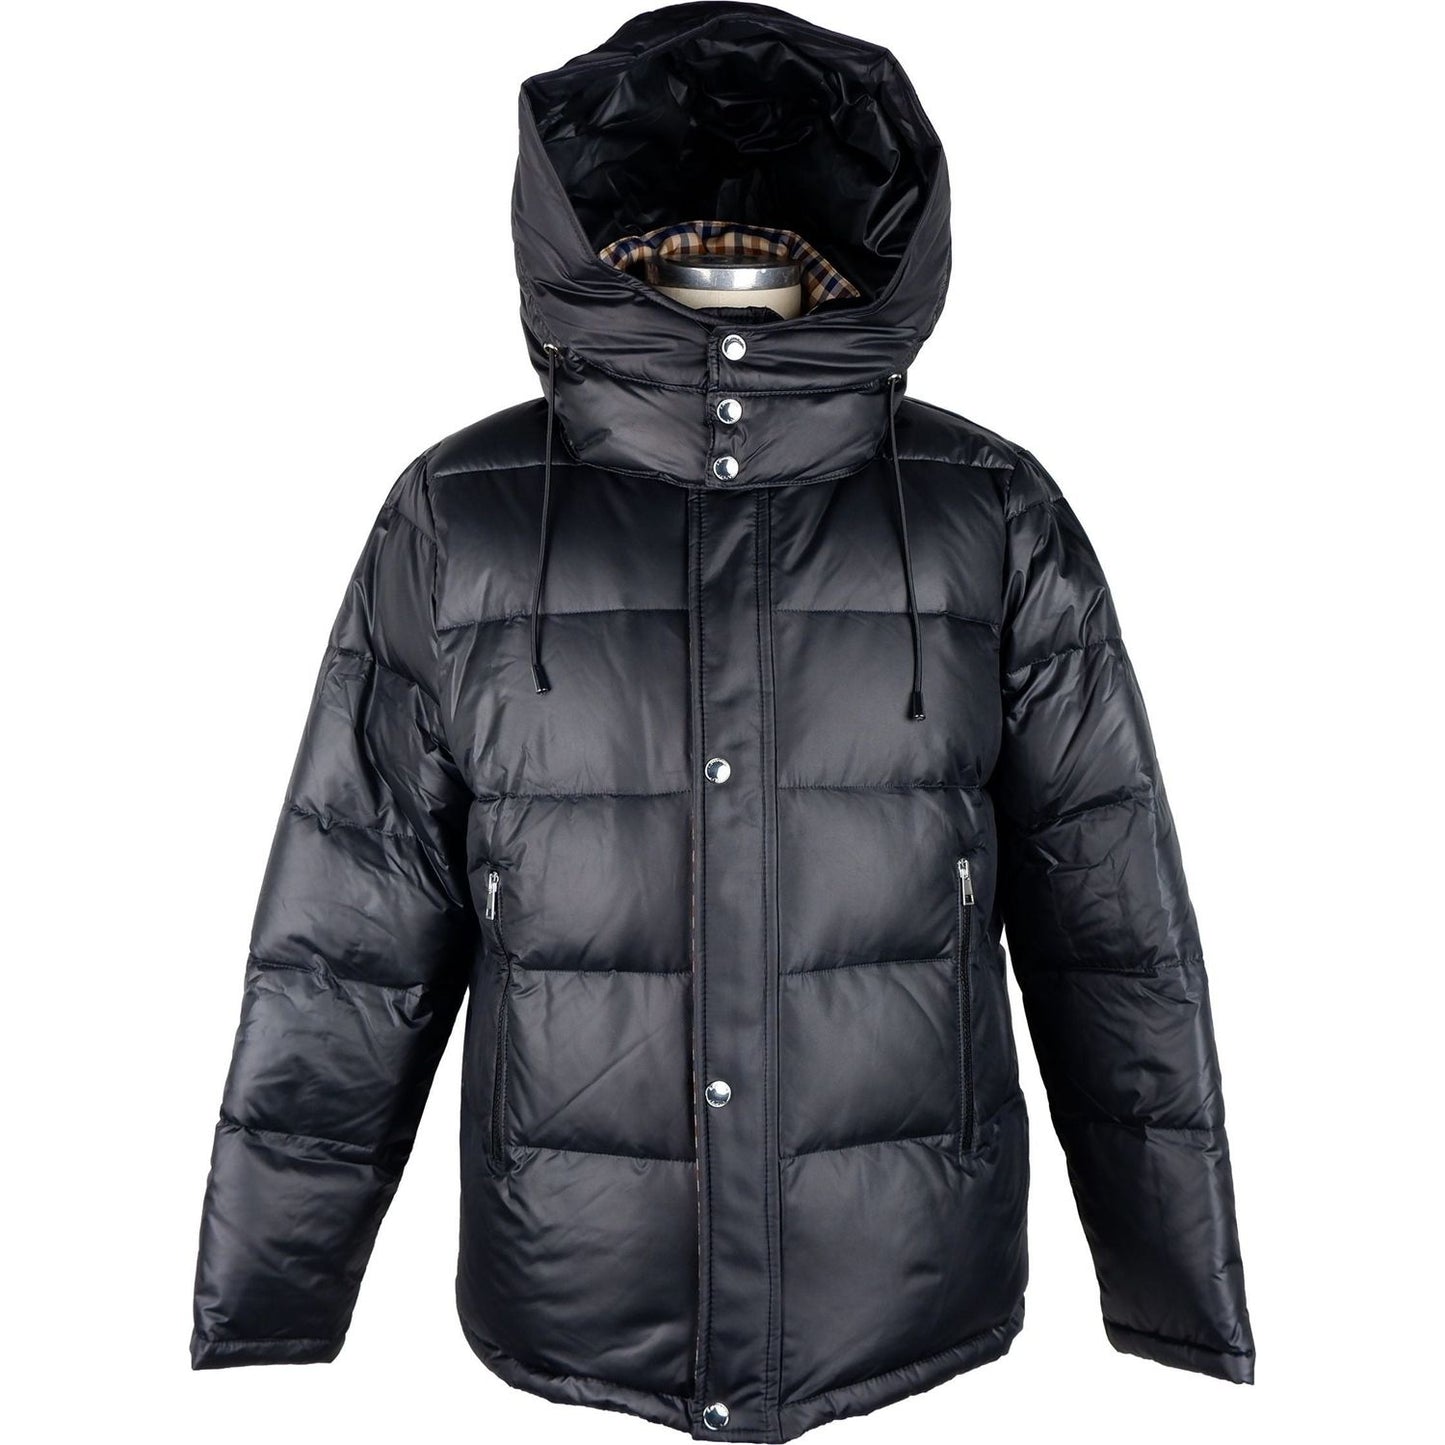 Aquascutum Elegant Black Padded Jacket with Removable Hood MAN COATS & JACKETS black-polyester-jacket-3 product-7381-1672750303-scaled-25bf6ebf-a95.jpg